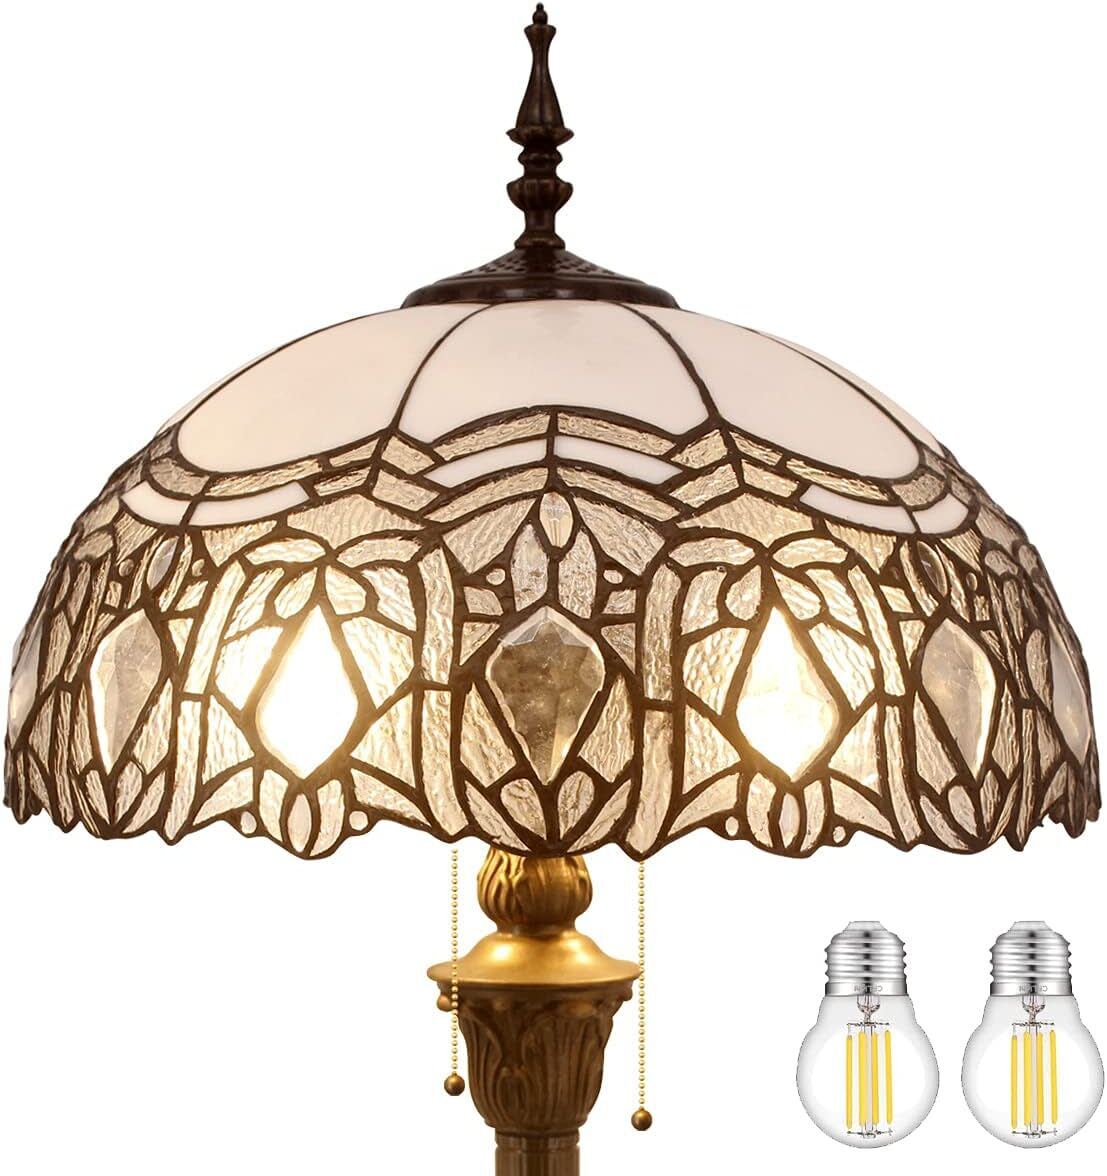 Victorian style floor lamps